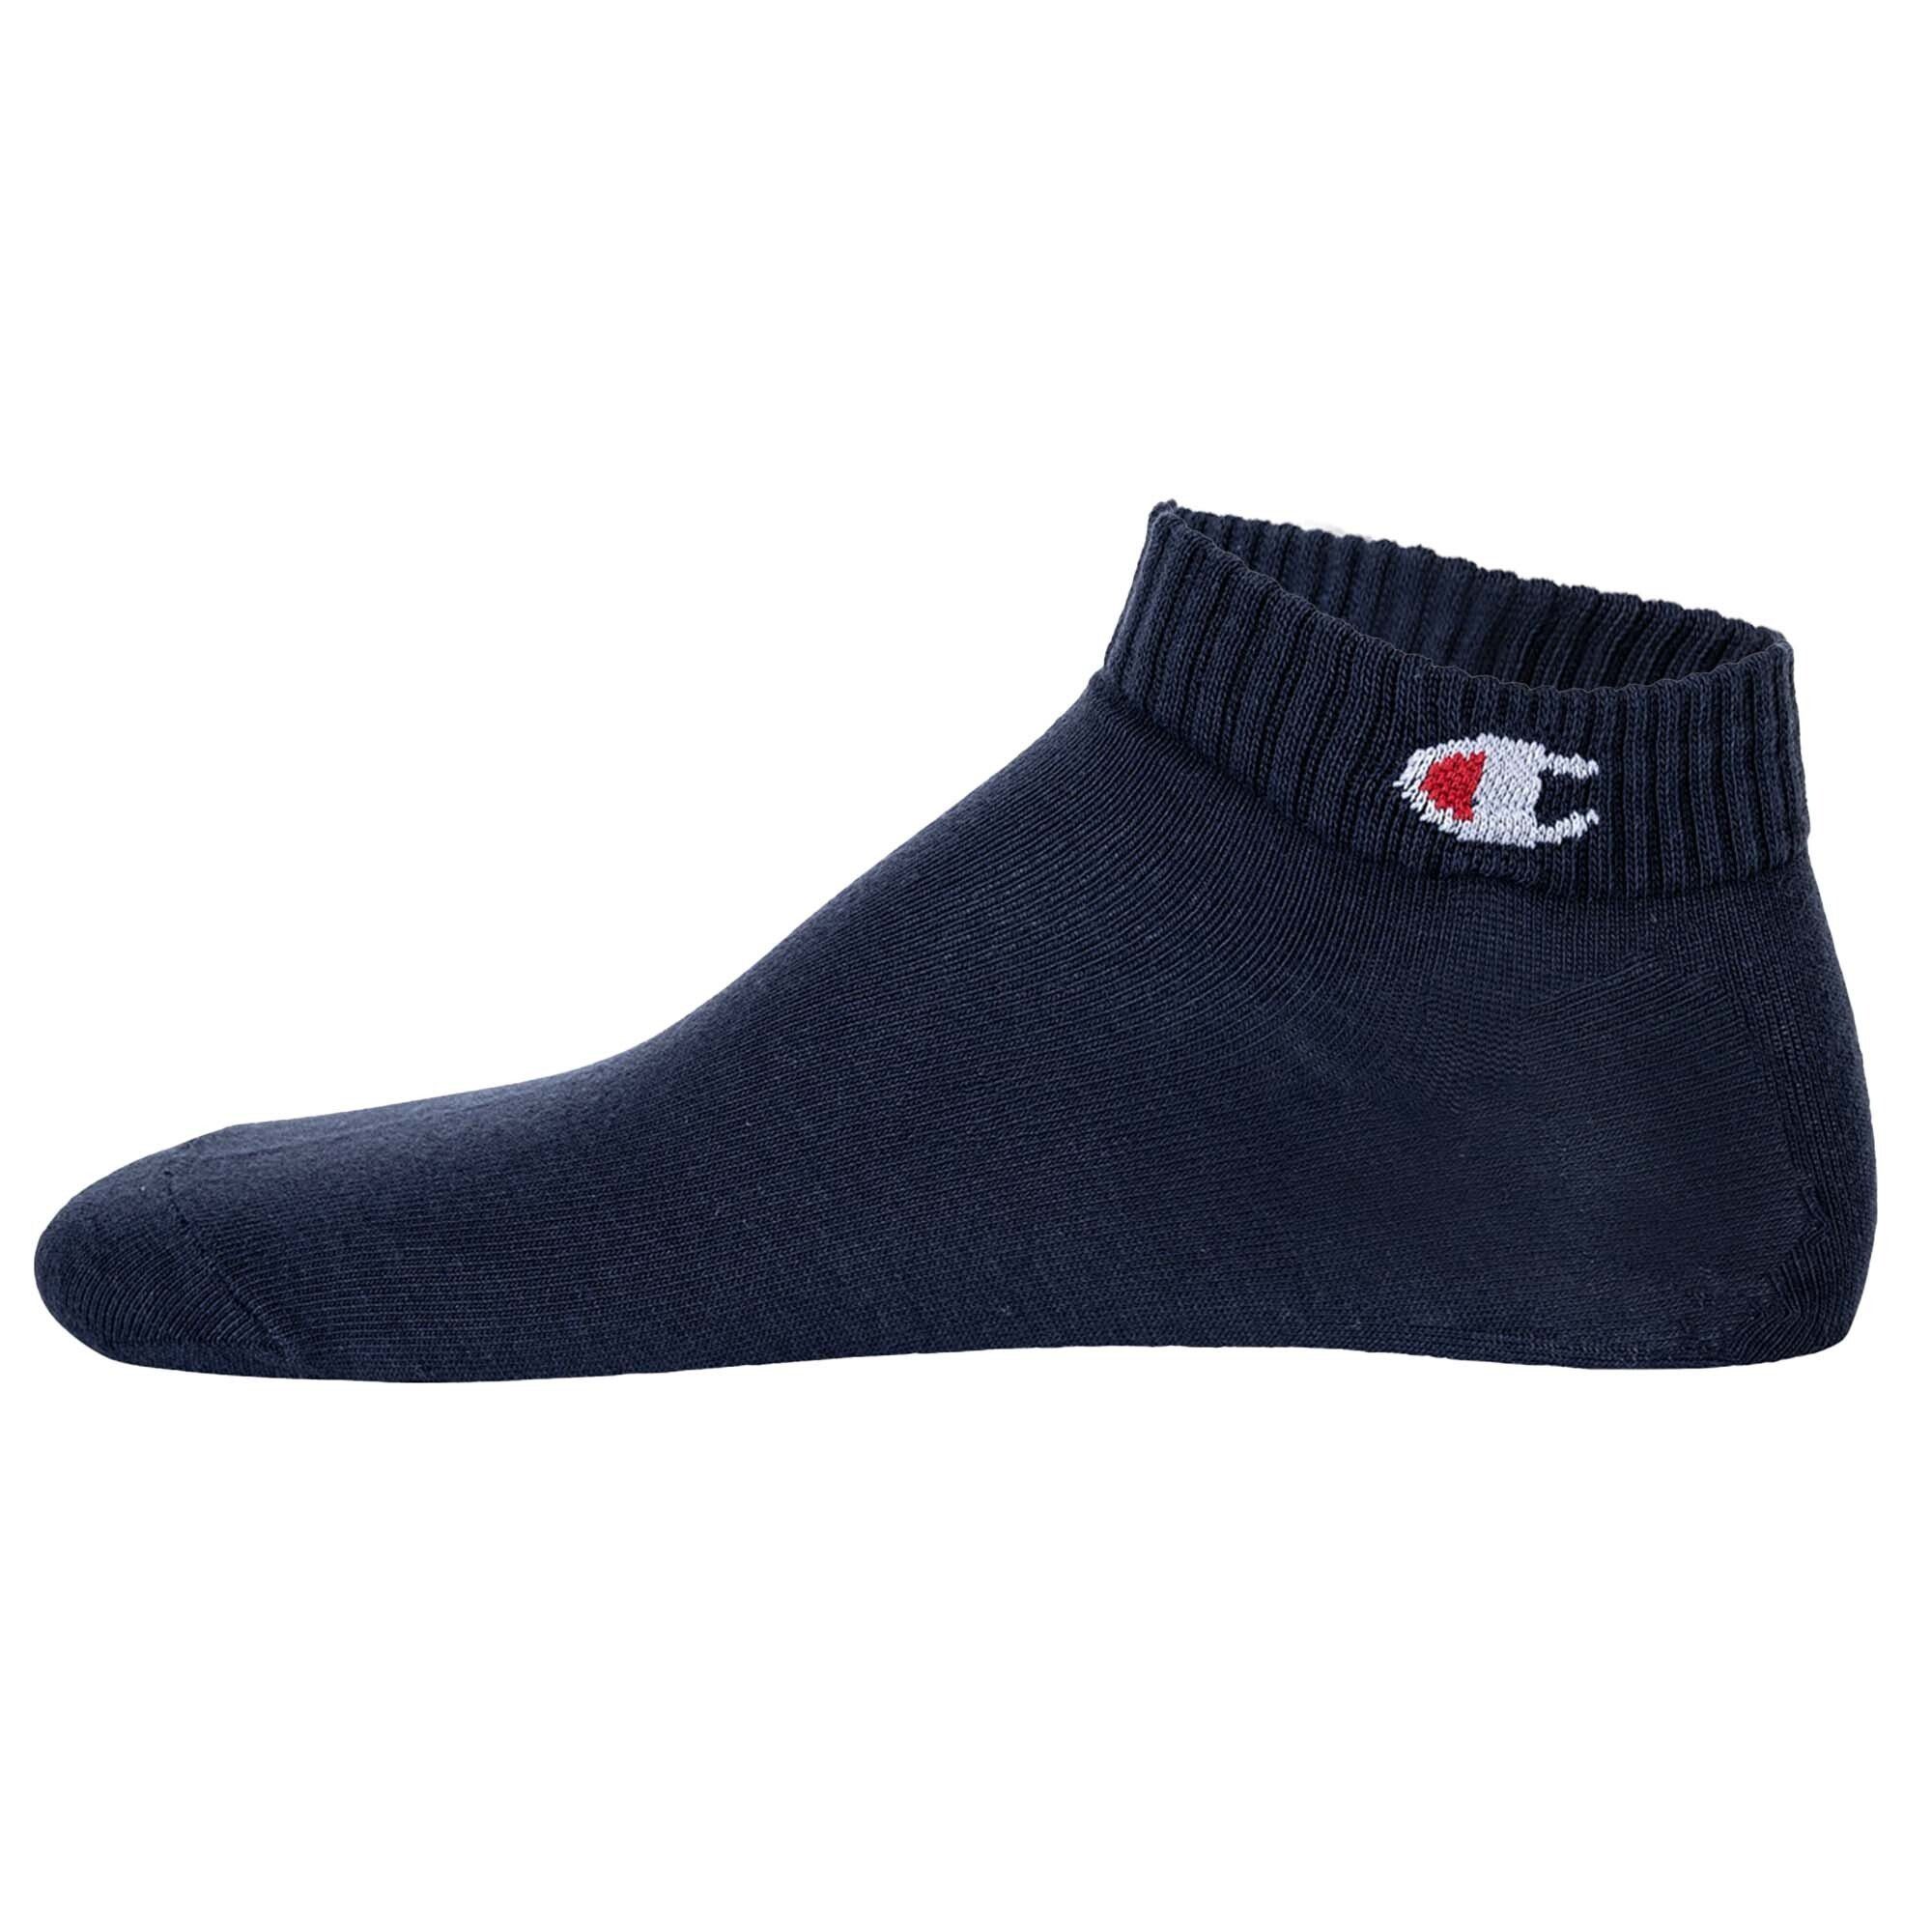 - Blau/Weiß/Grau Paar Socken Sportsocken Socken, Basic Champion Crew 6 Unisex